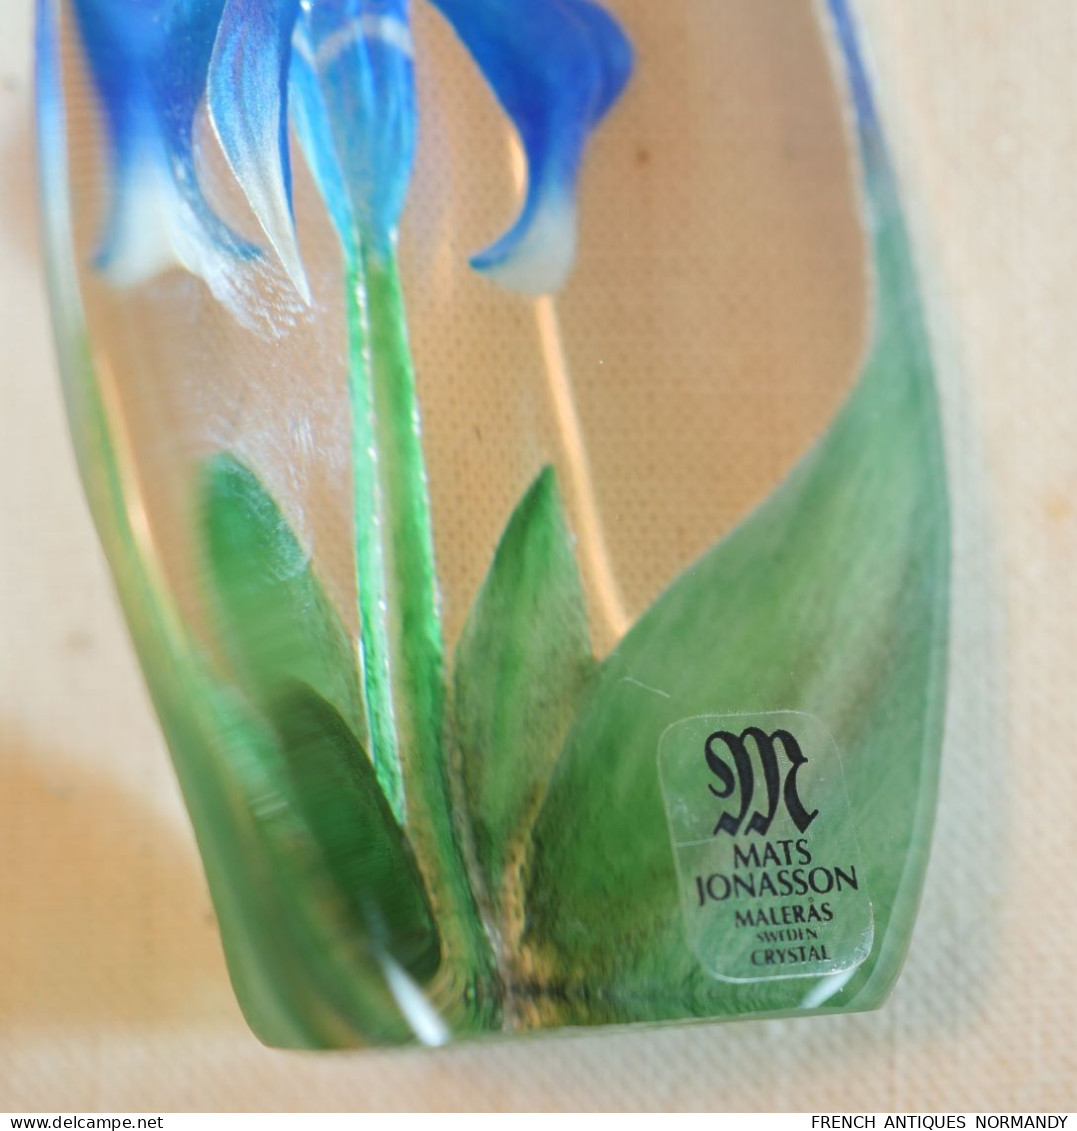 Sculpture florale cristal Mats Jonasson suéde Maleras Suède Sculpture Iris bleu Signée BX24JON002